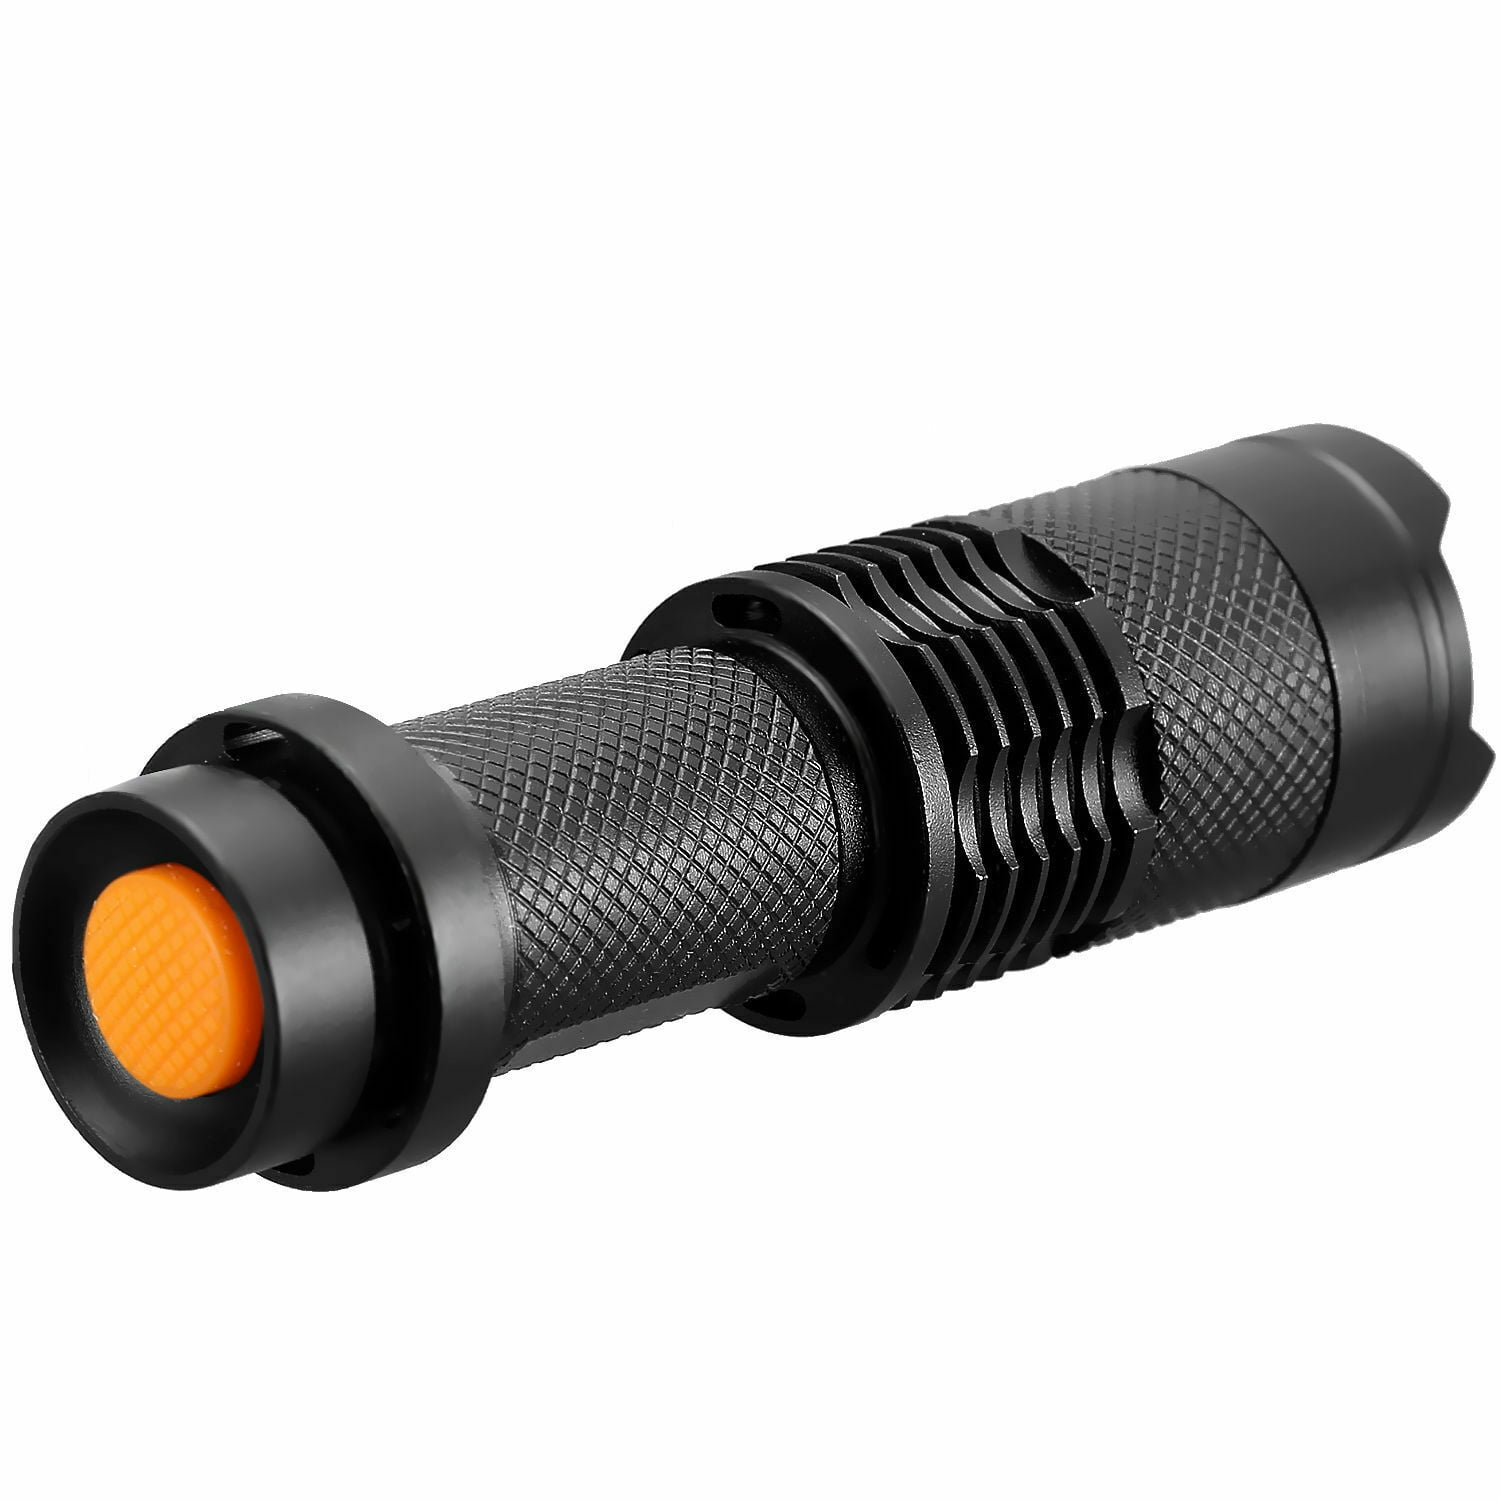 10 x UltraFire Military CREE XM-L T6 10000LM LED Flashlight  Police Torch Lamp 